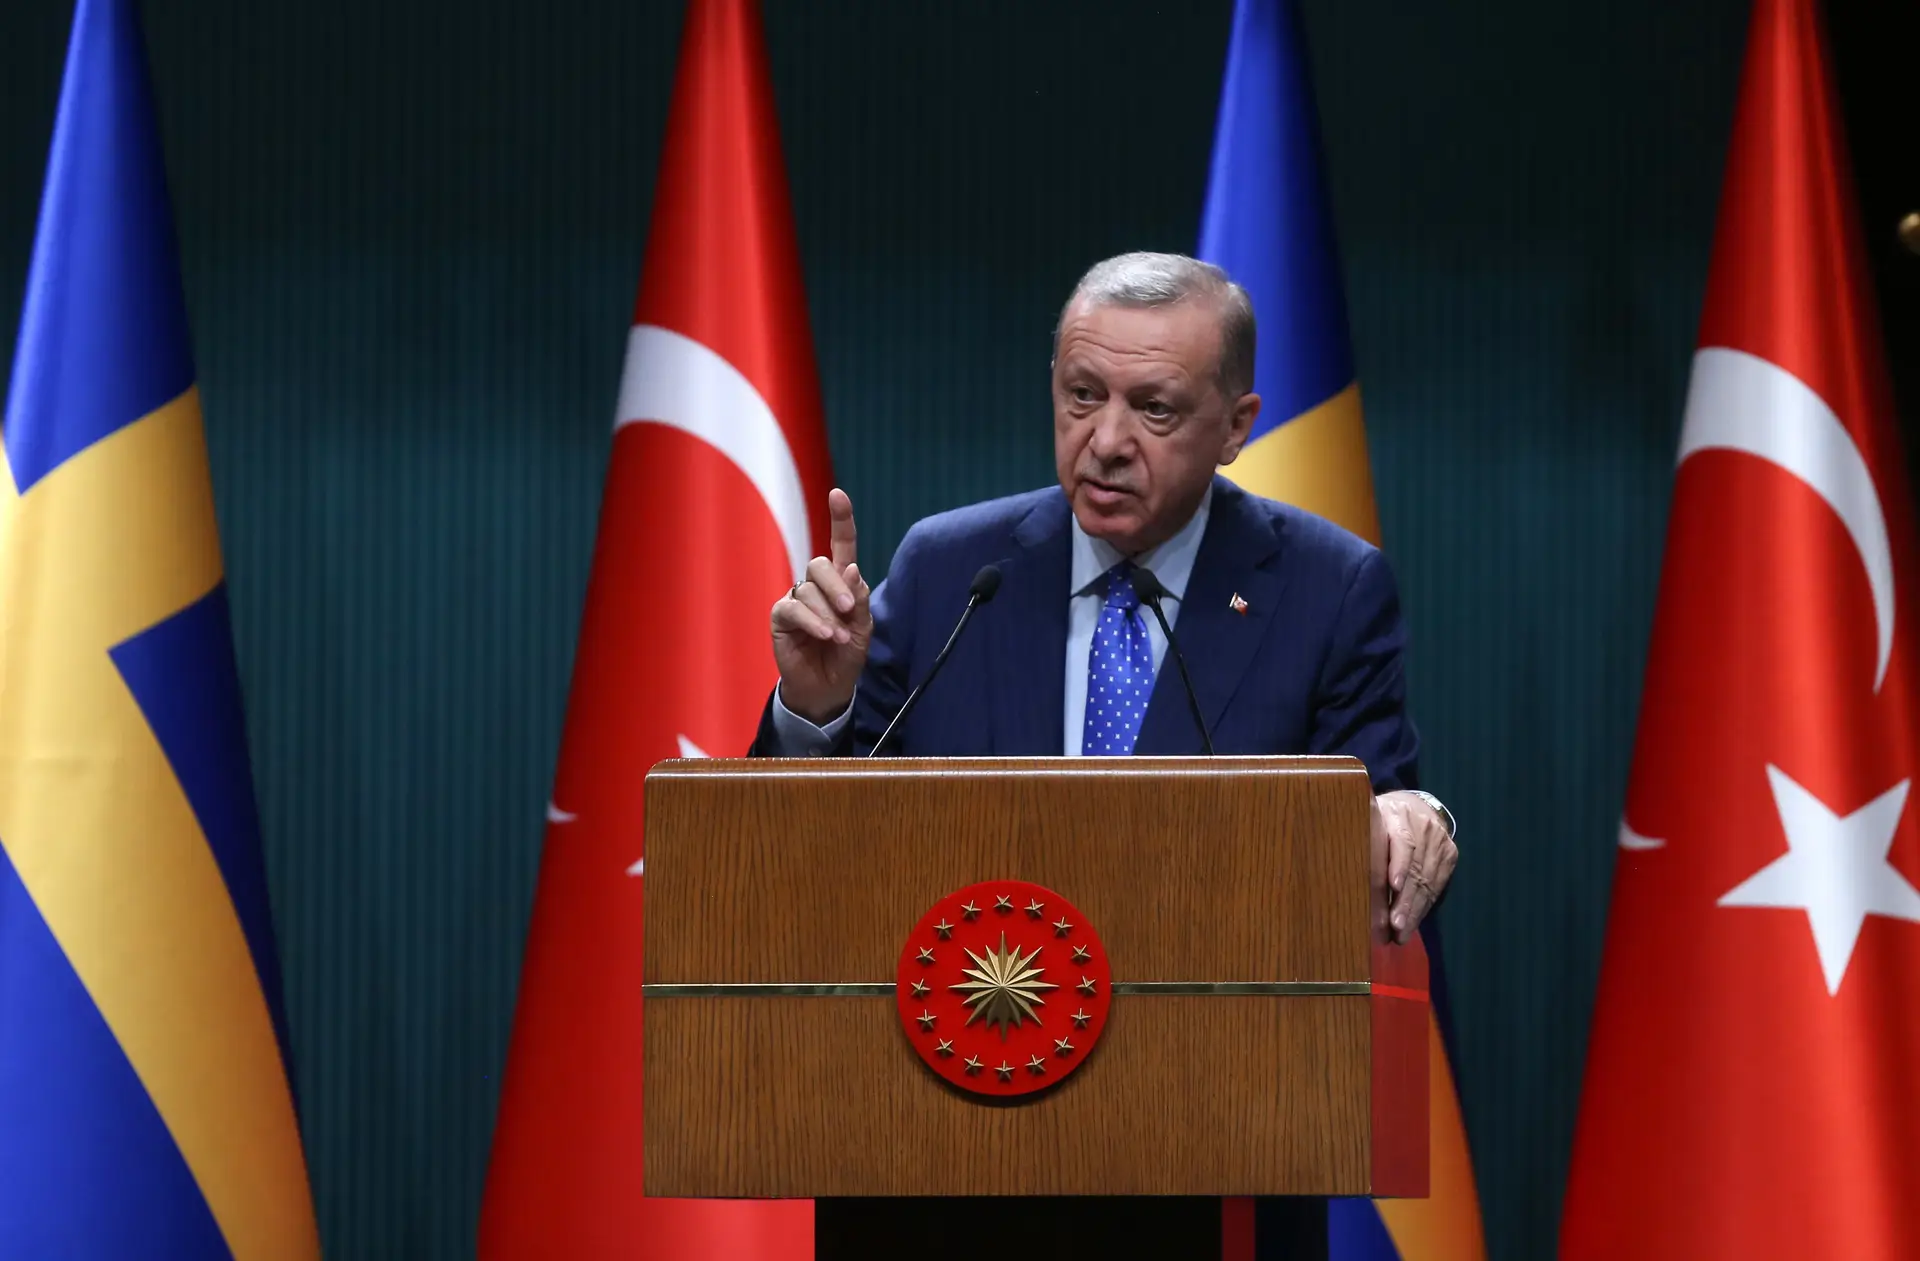 Presidente turco condena "ataque vil" em Istambul